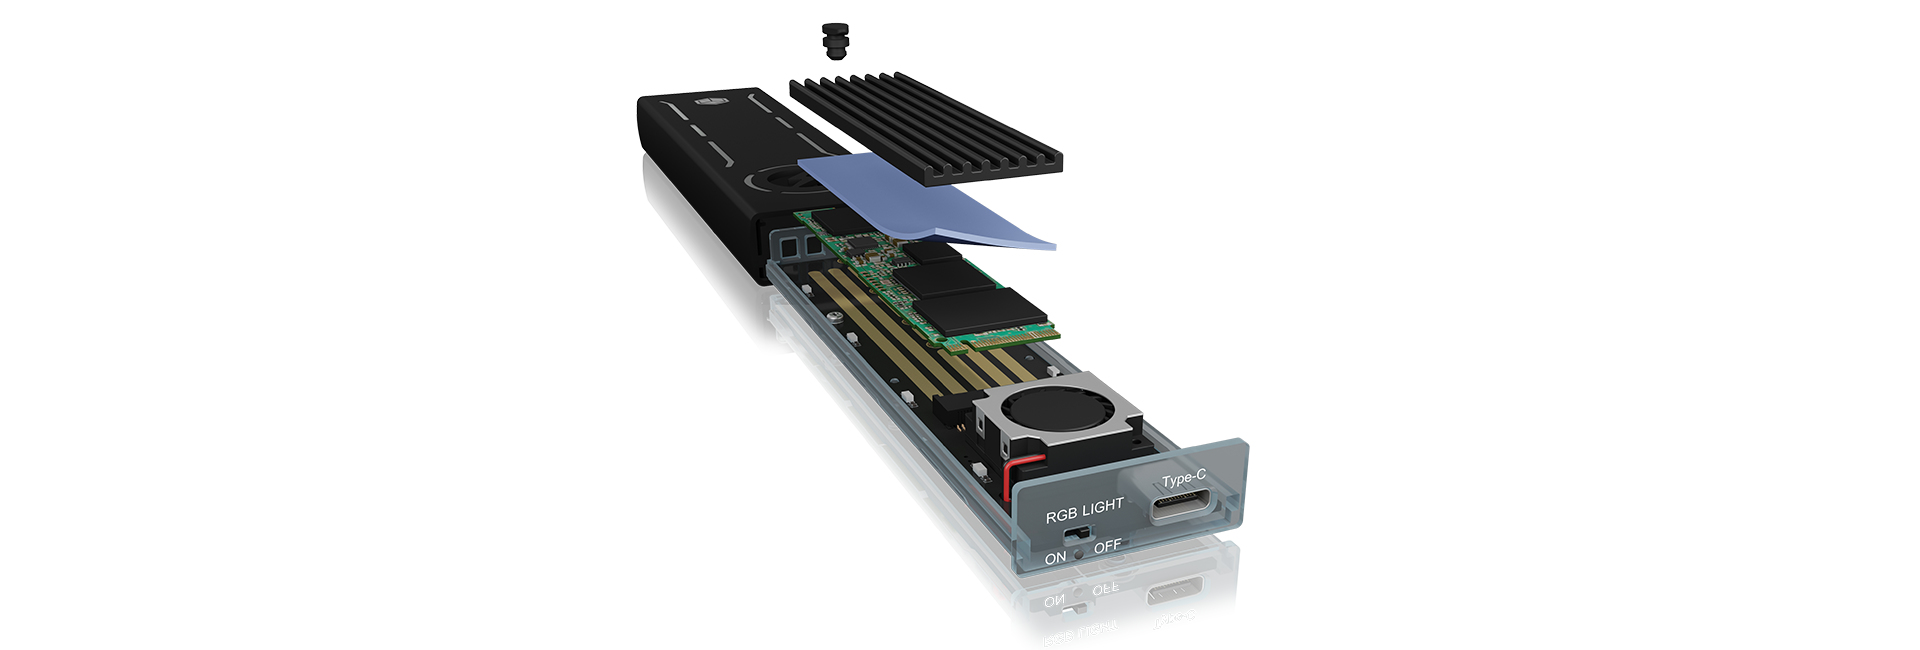 ICY BOX ICY BOX IB-G1826MF-C31 - Speichergehäuse - M.2 - M.2 NVMe Card - 10 Gbit/s - USB 3.1 (Gen 2)